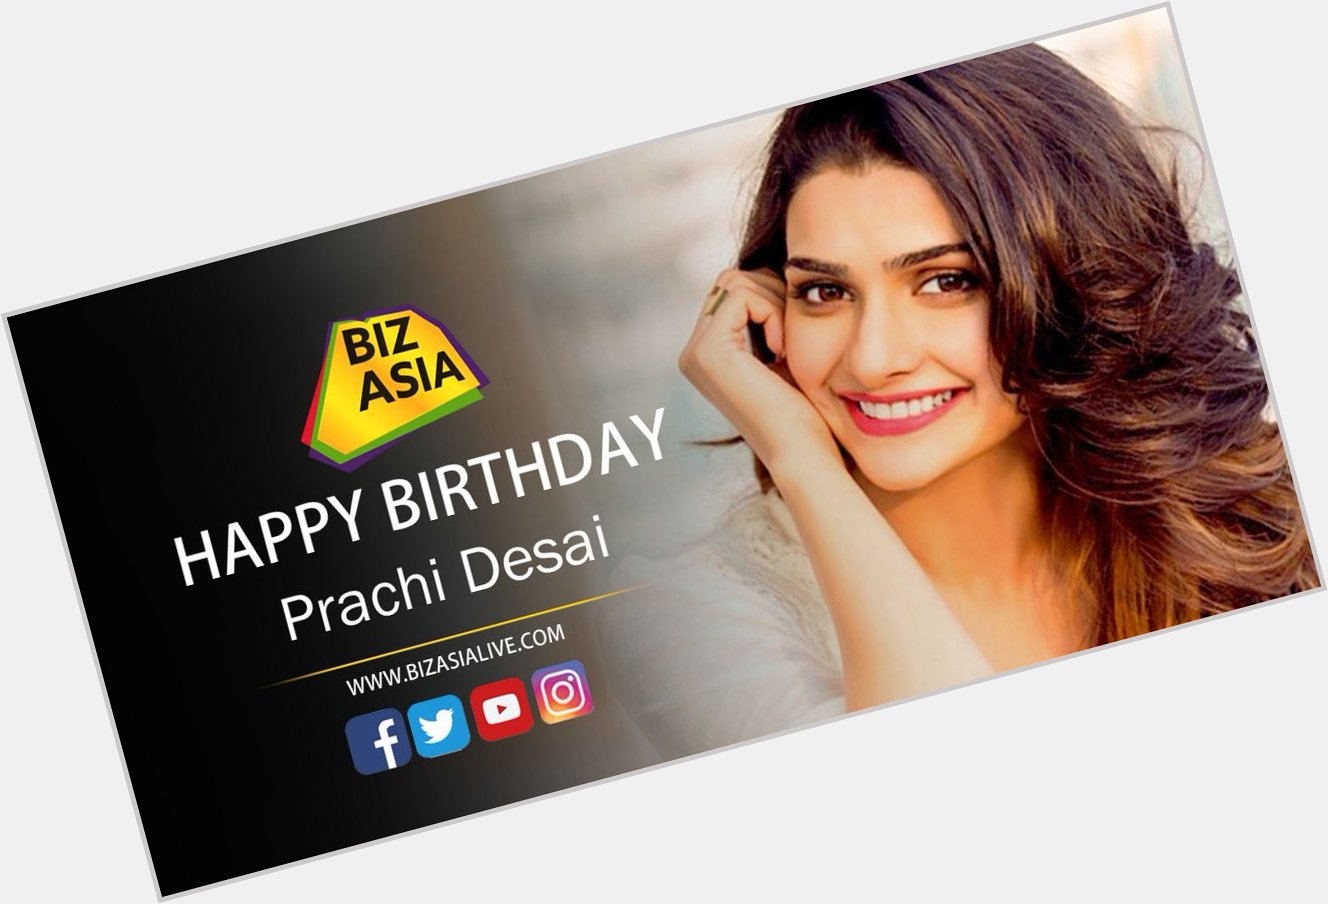  wishes Prachi Desai a very happy birthday.  